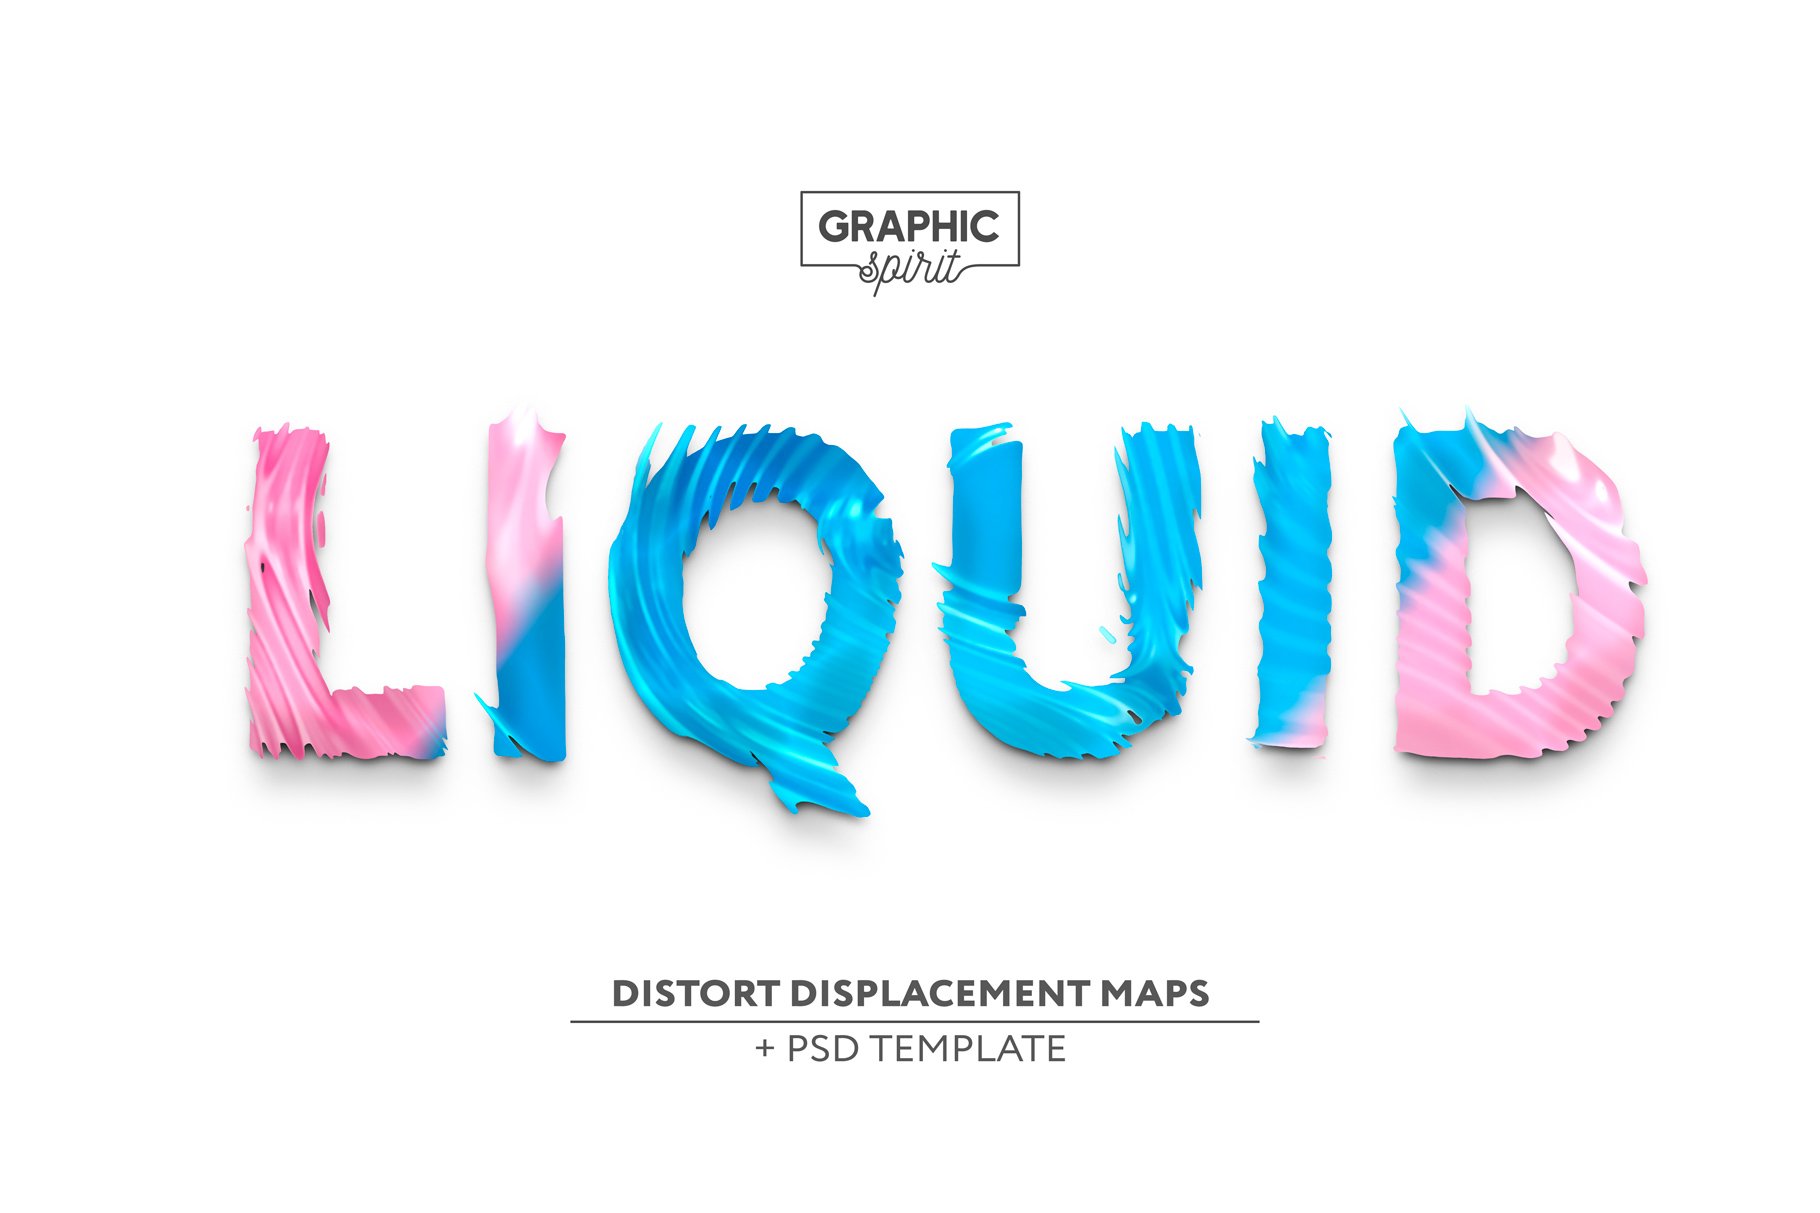 LIQUID Distort Displacement Maps +cover image.